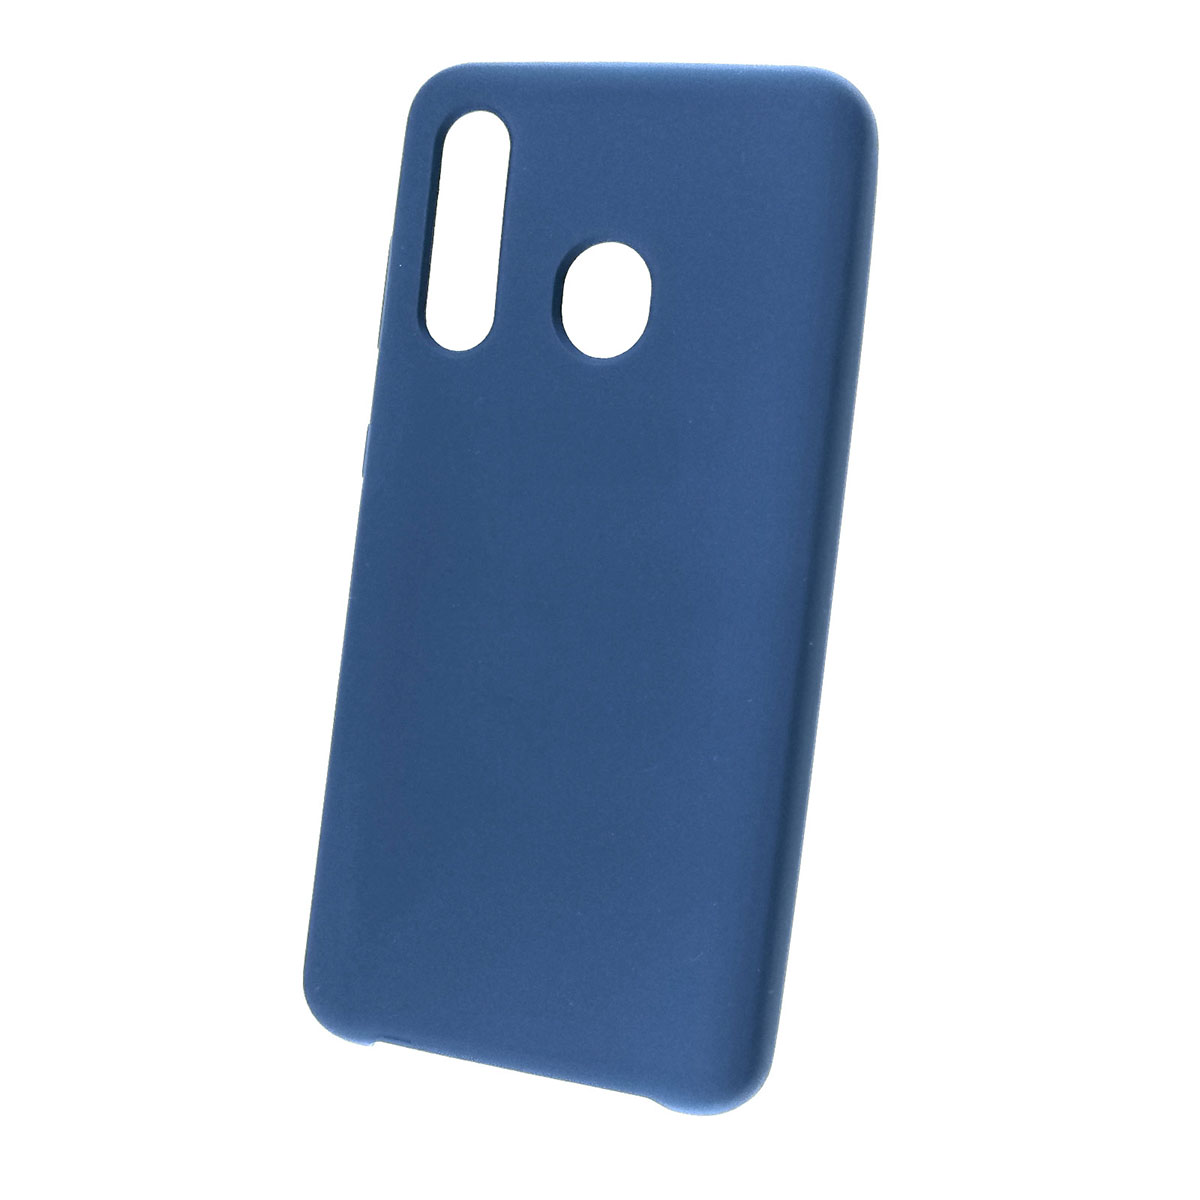 Чехол накладка Silicon Cover для SAMSUNG Galaxy A60 2019 (SM-A605), Galaxy M40 (SM-M405), силикон, бархат, цвет темно синий.